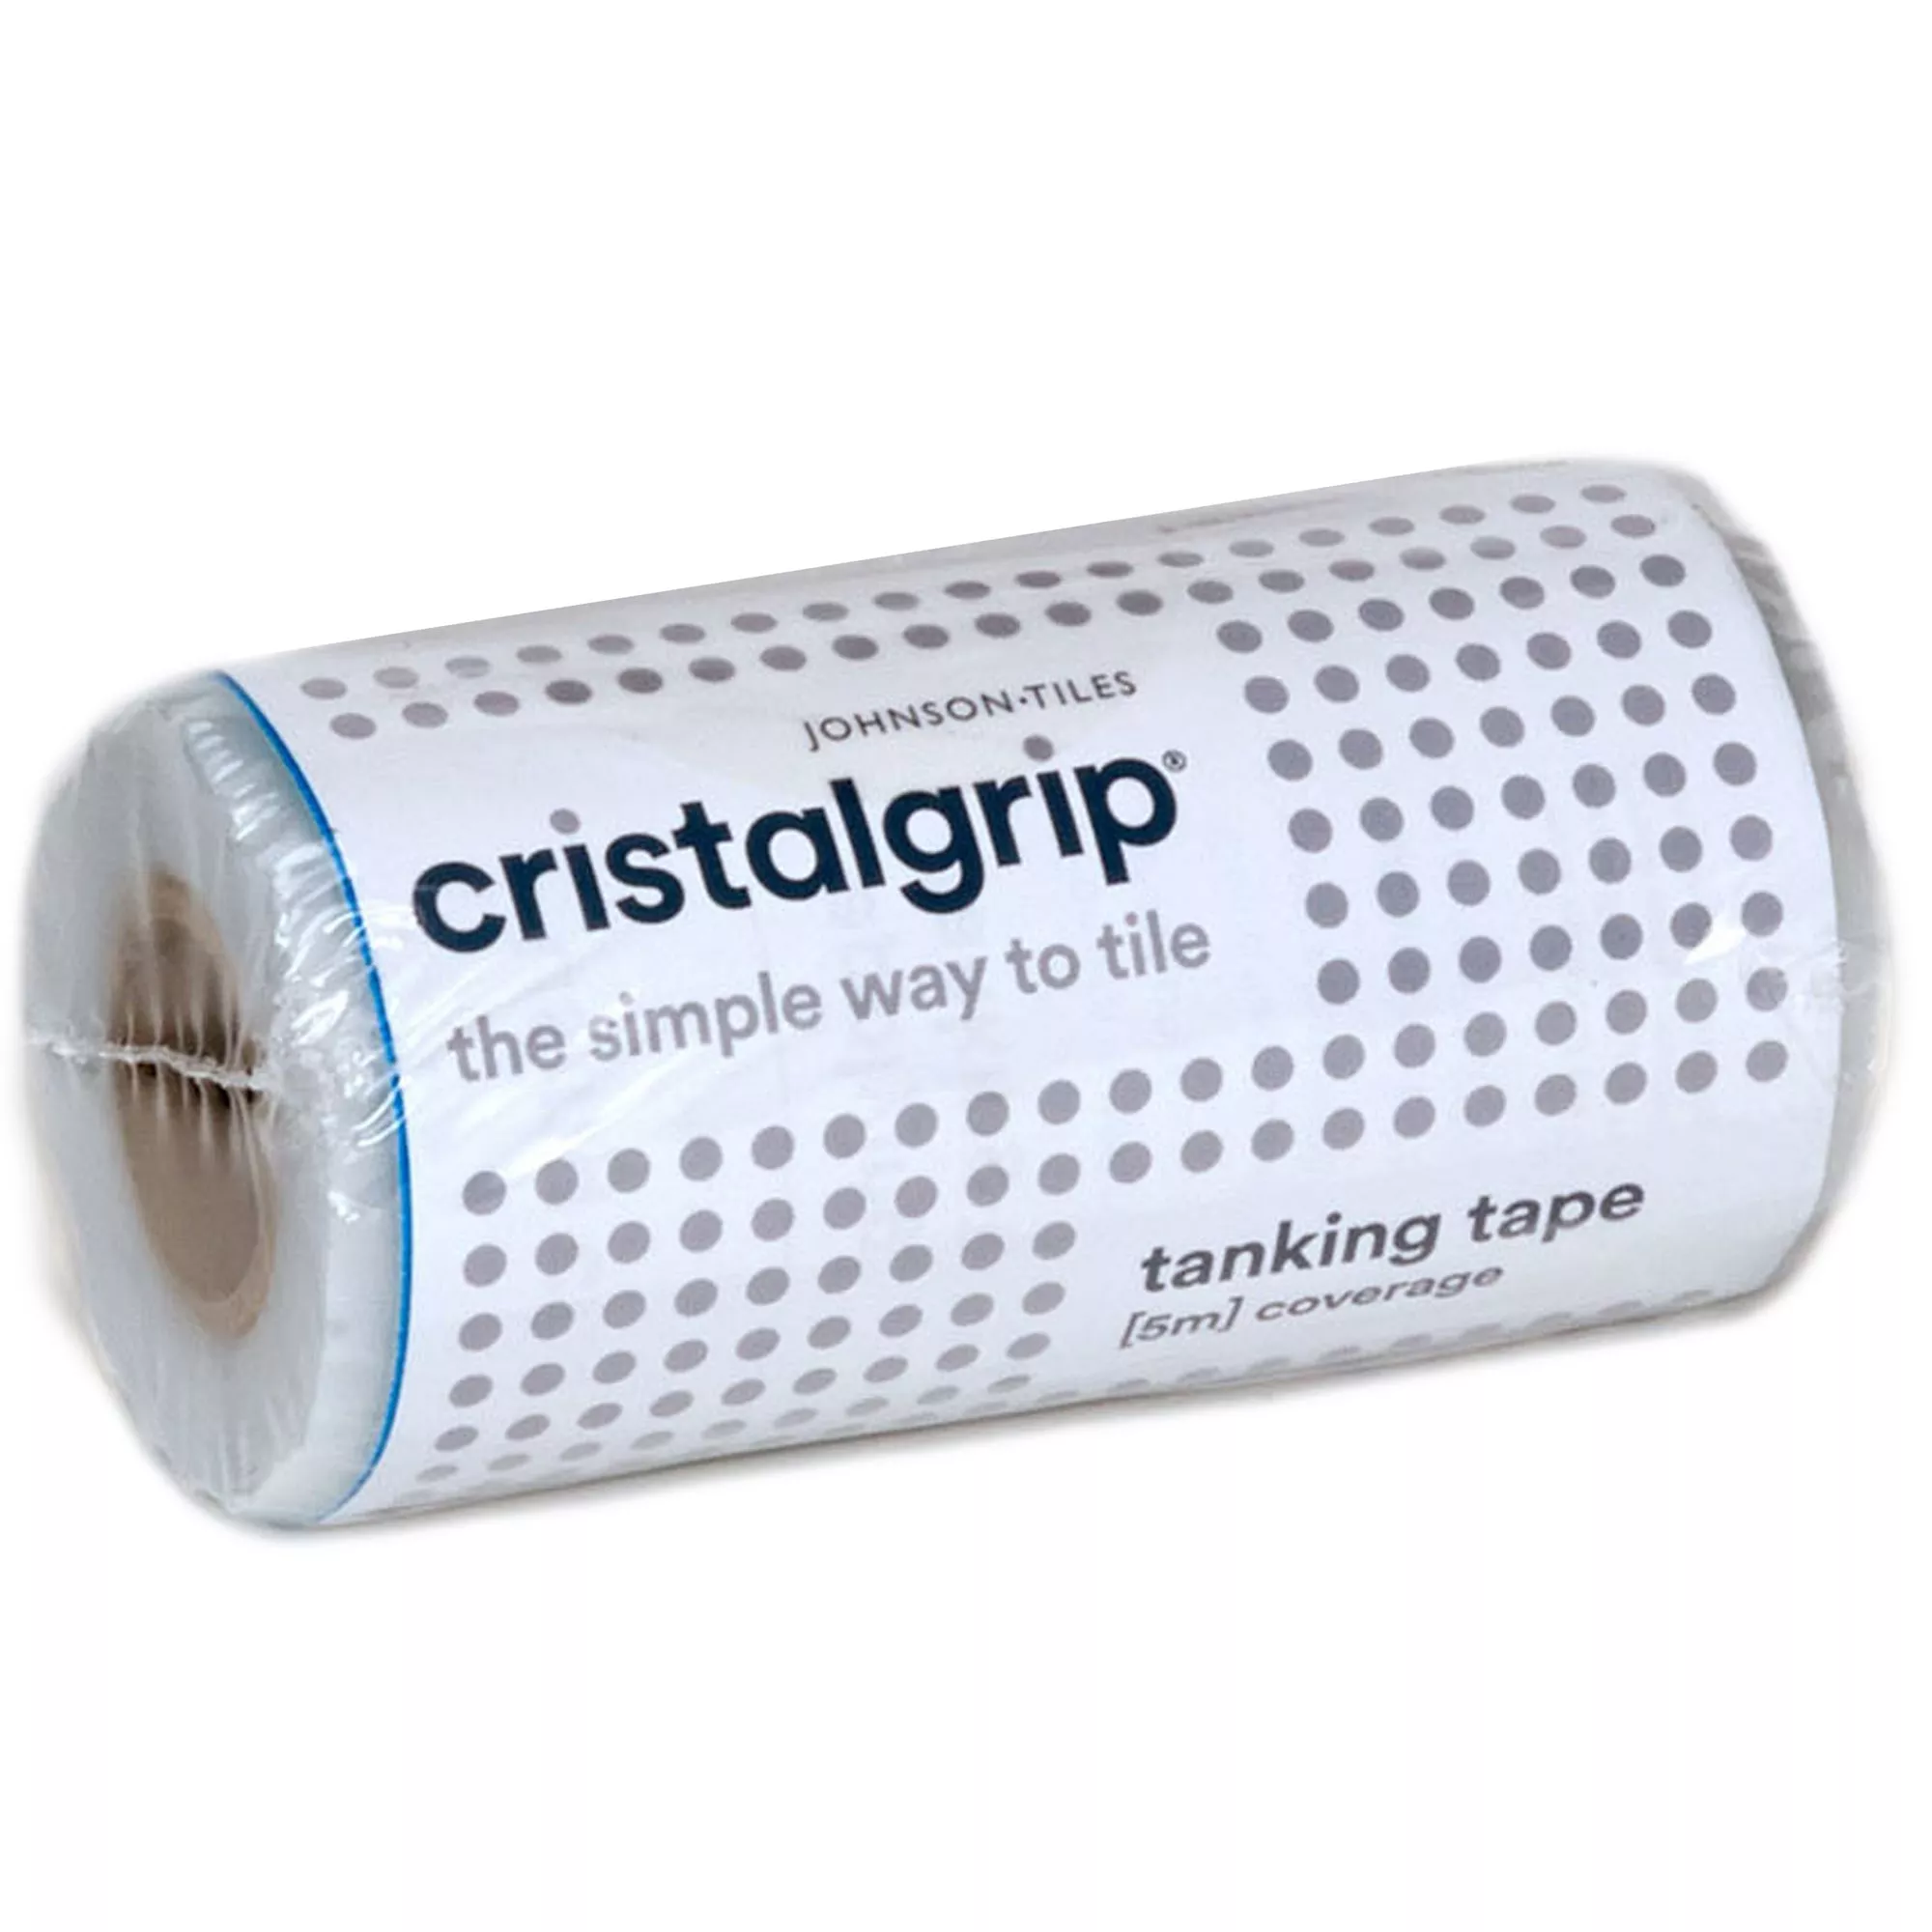 Cristalgrip wall tile sealing tape